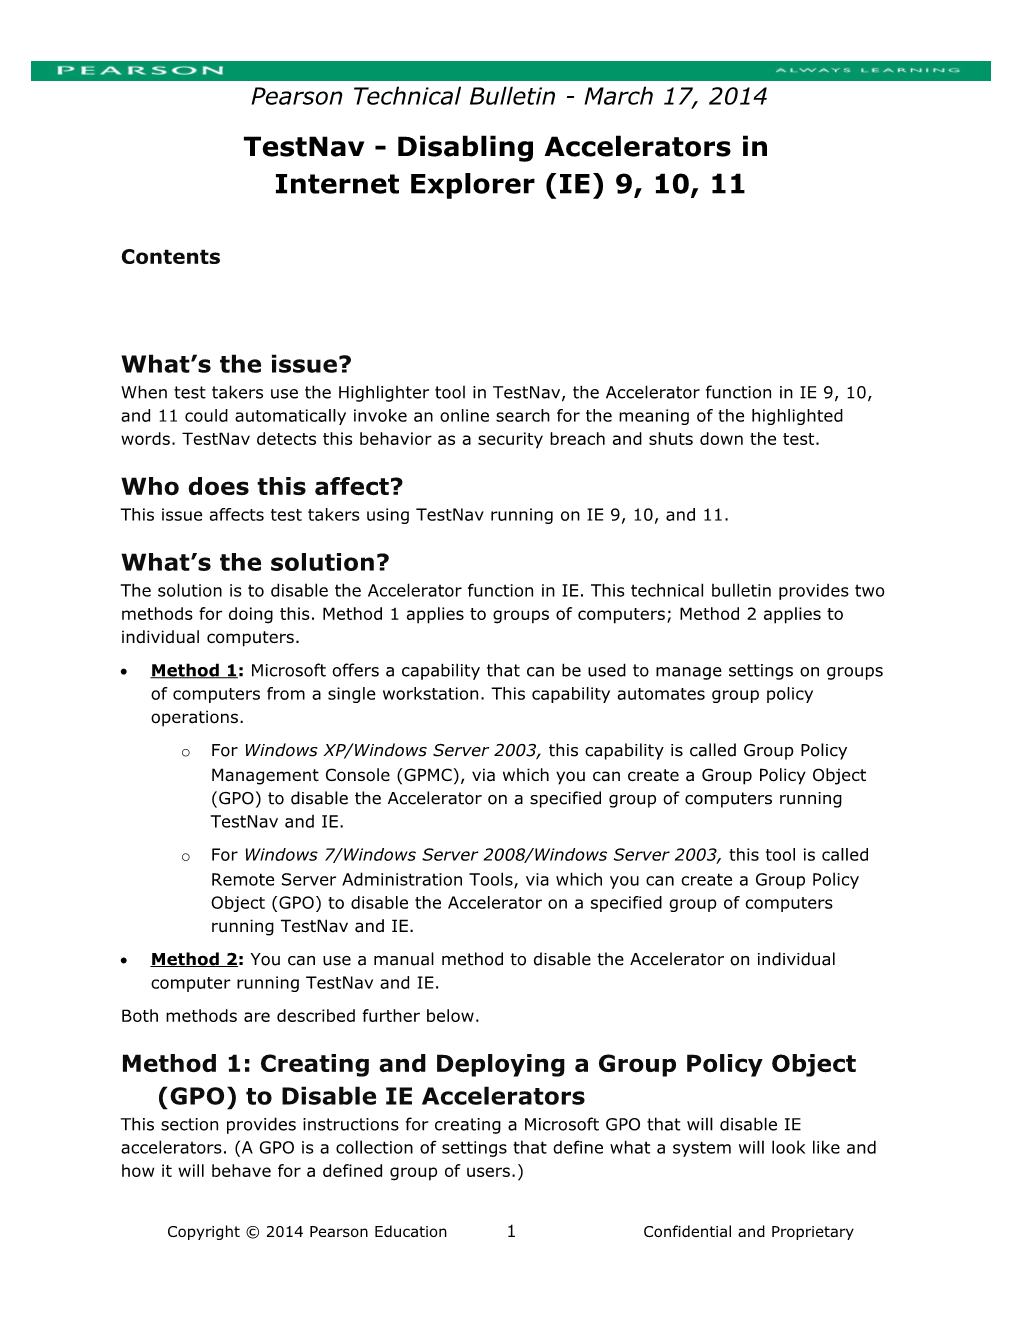 Testnav - Disabling Accelerators in Internet Explorer 9, 10, and 11